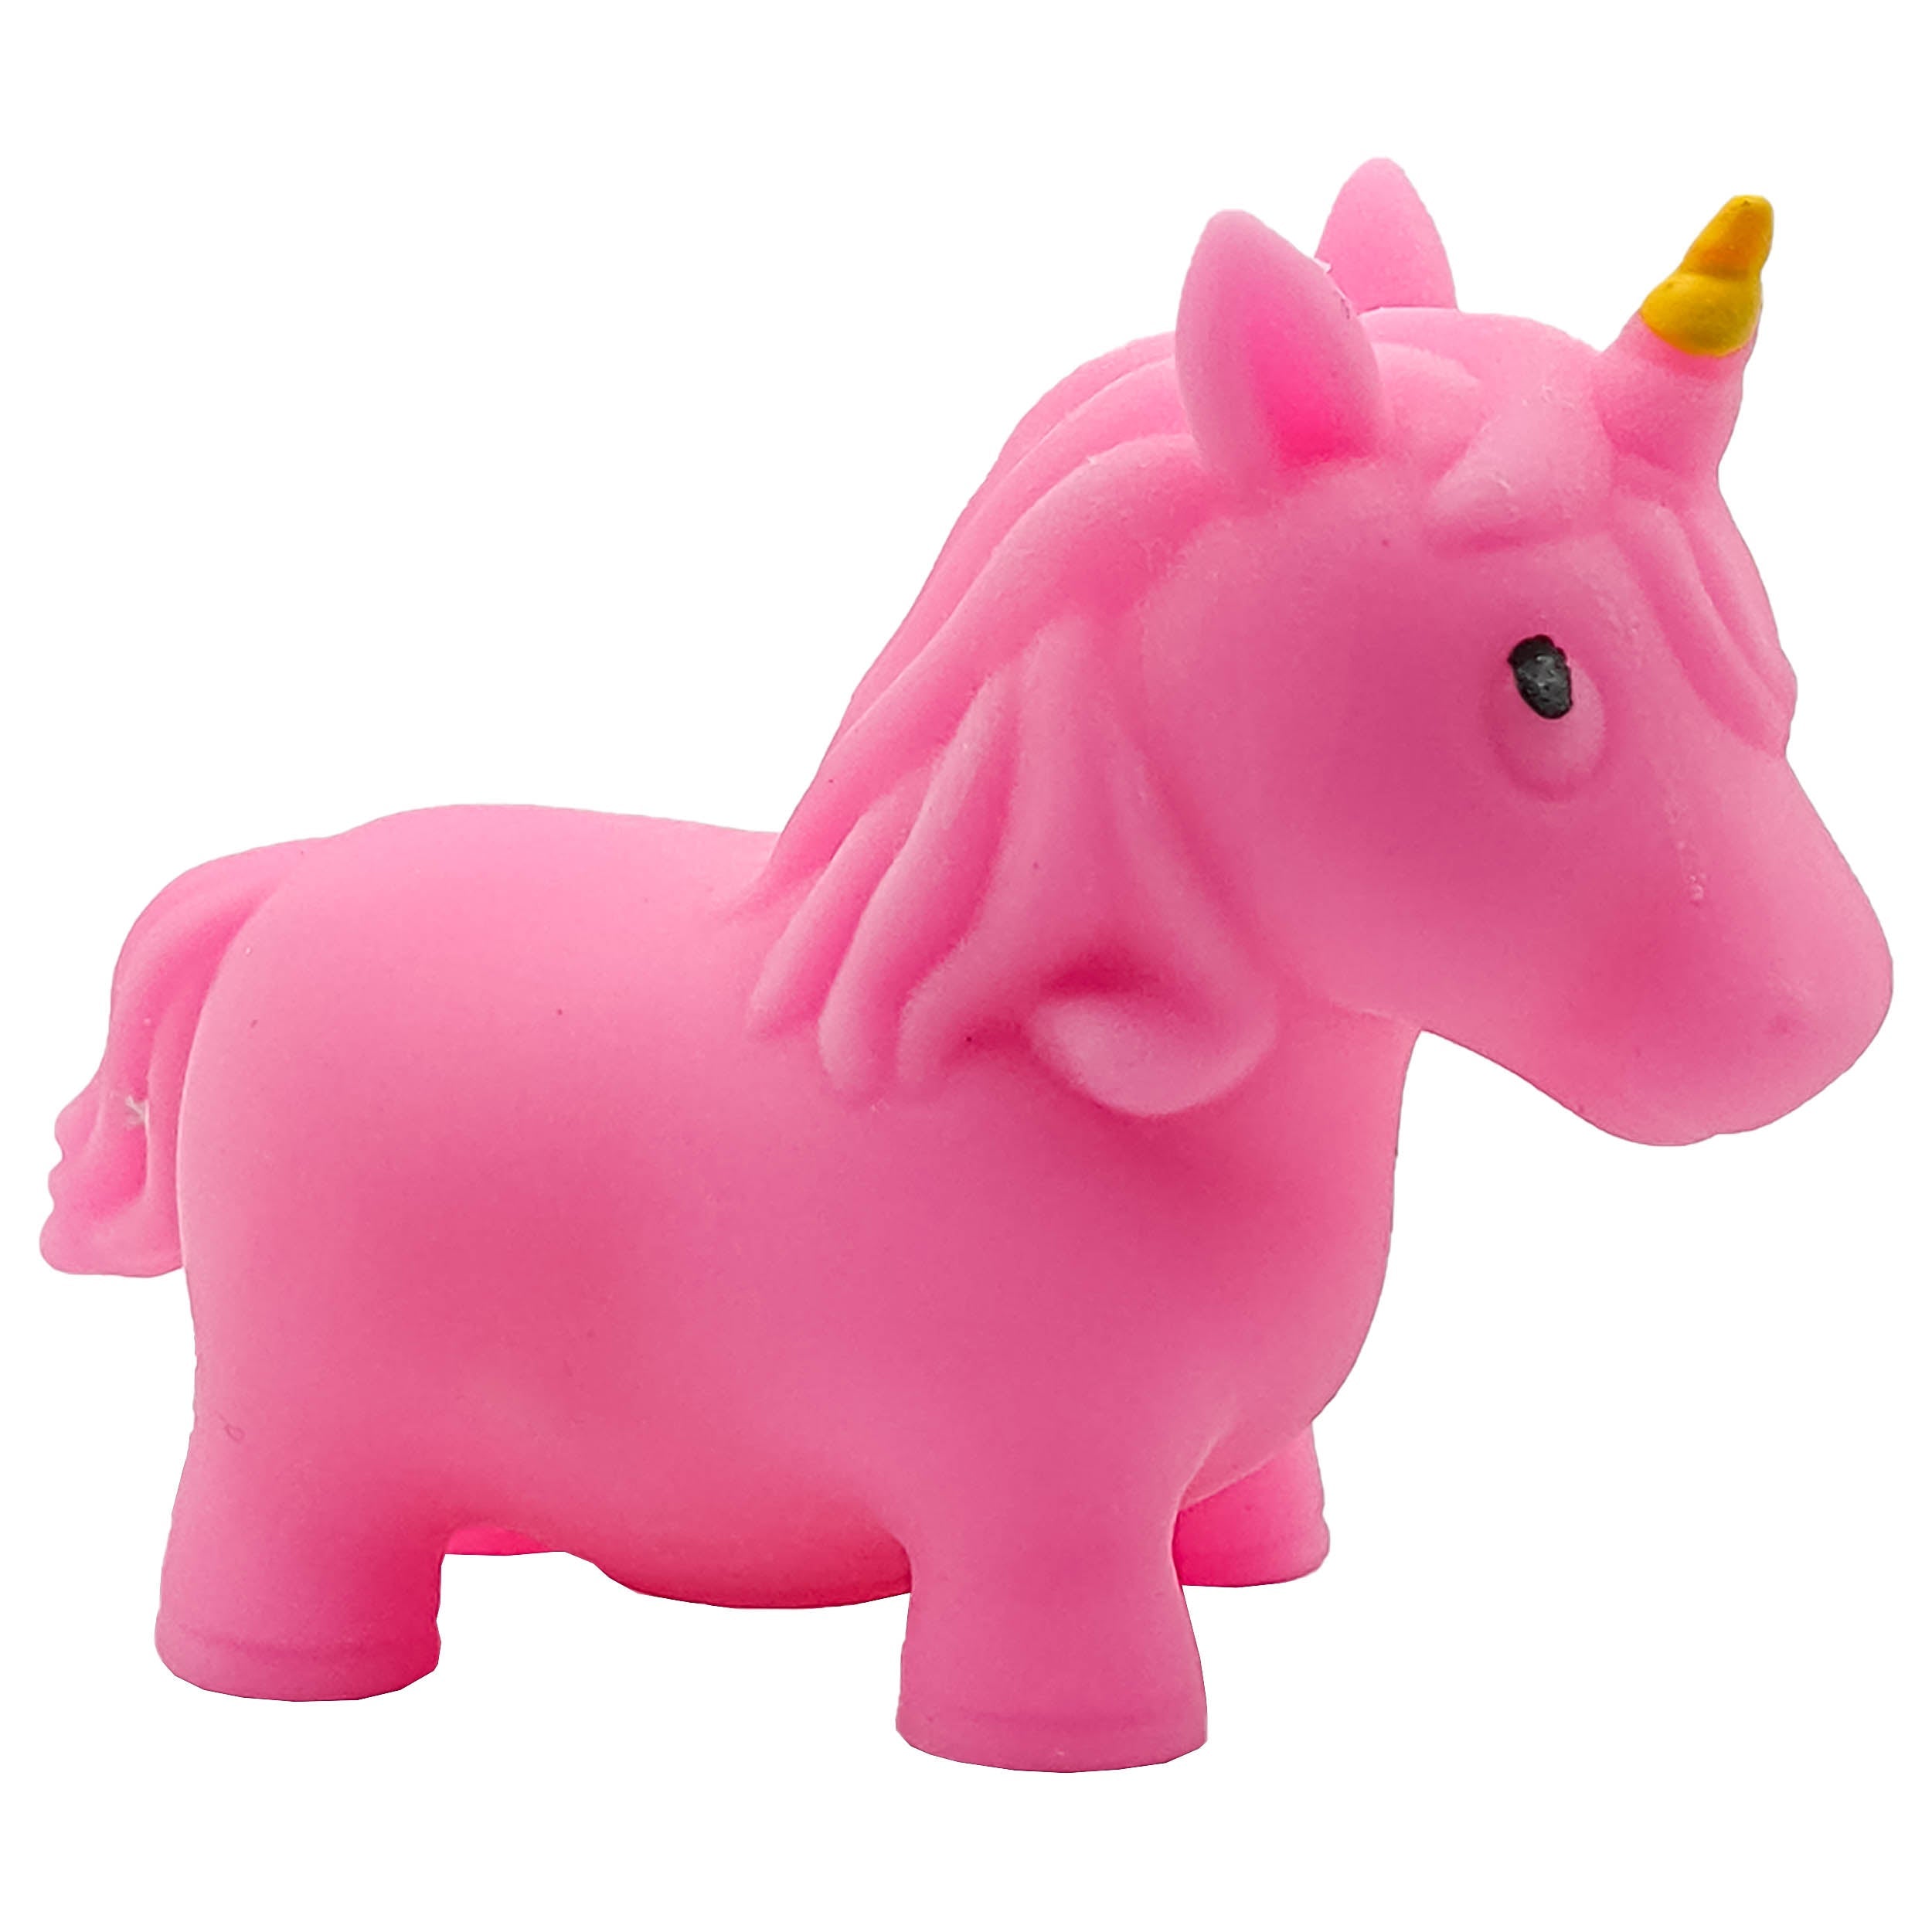  Pink Unicorn Shaped Squishy Toy 